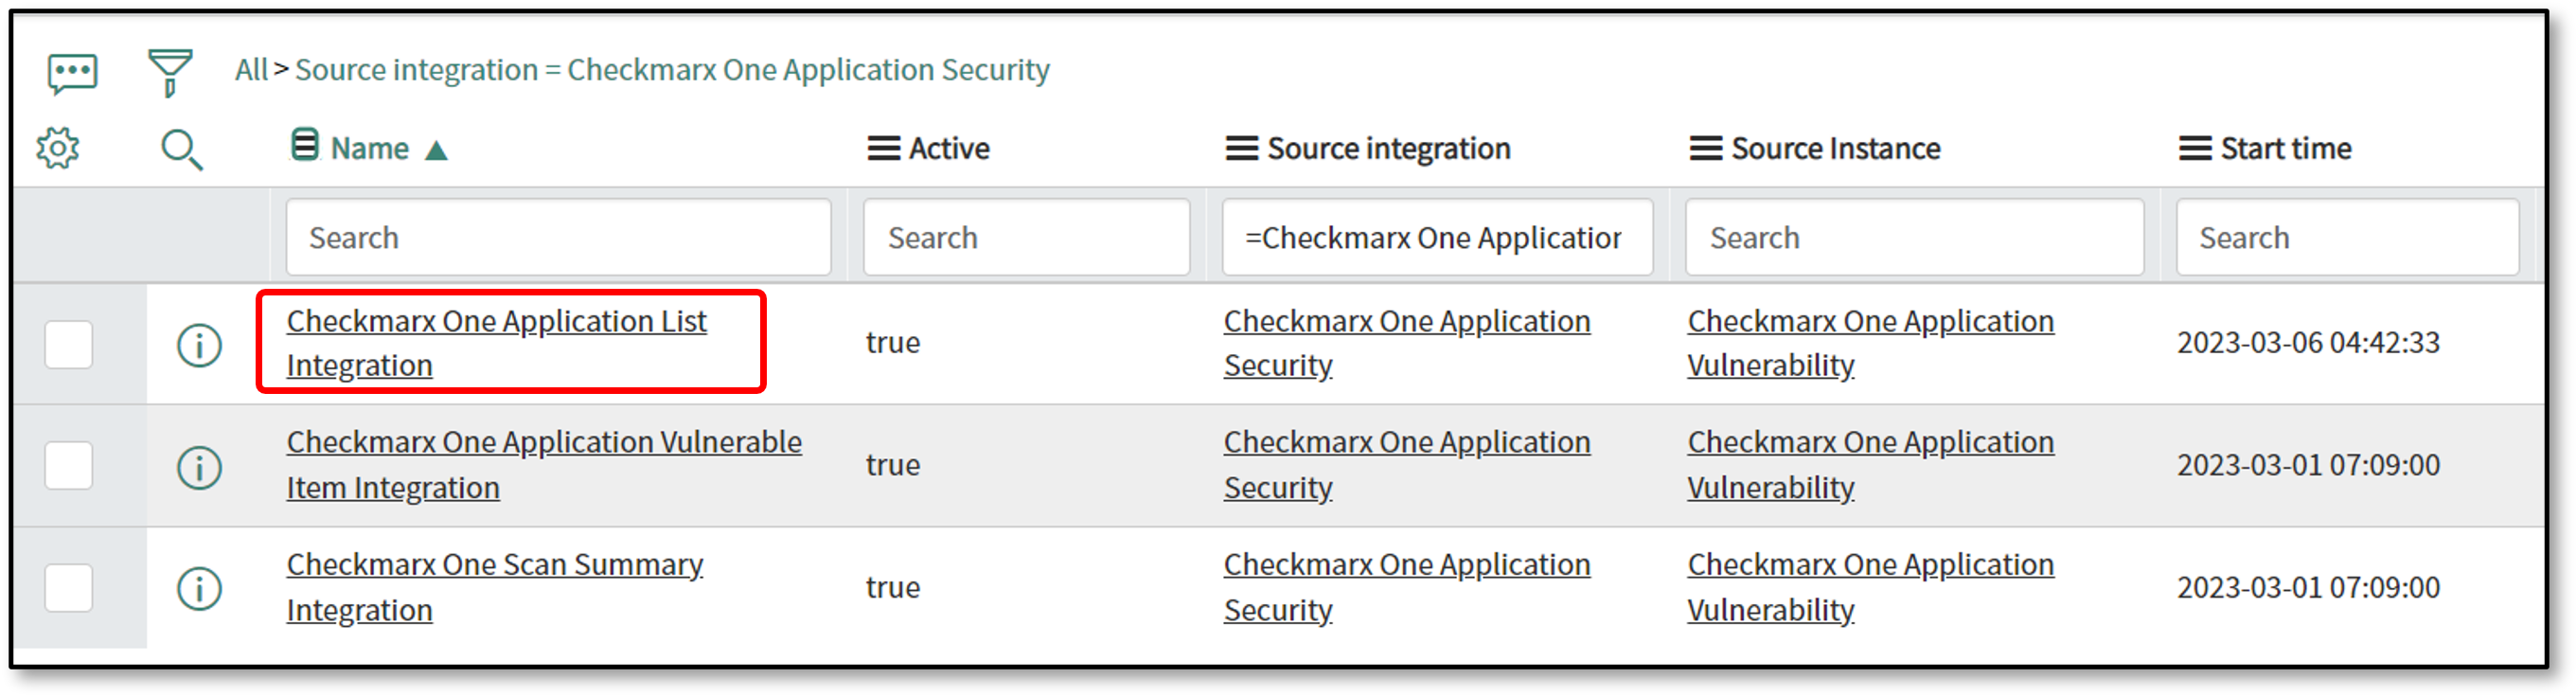 CheckmarxOne_Application_List_Integration_Update.png